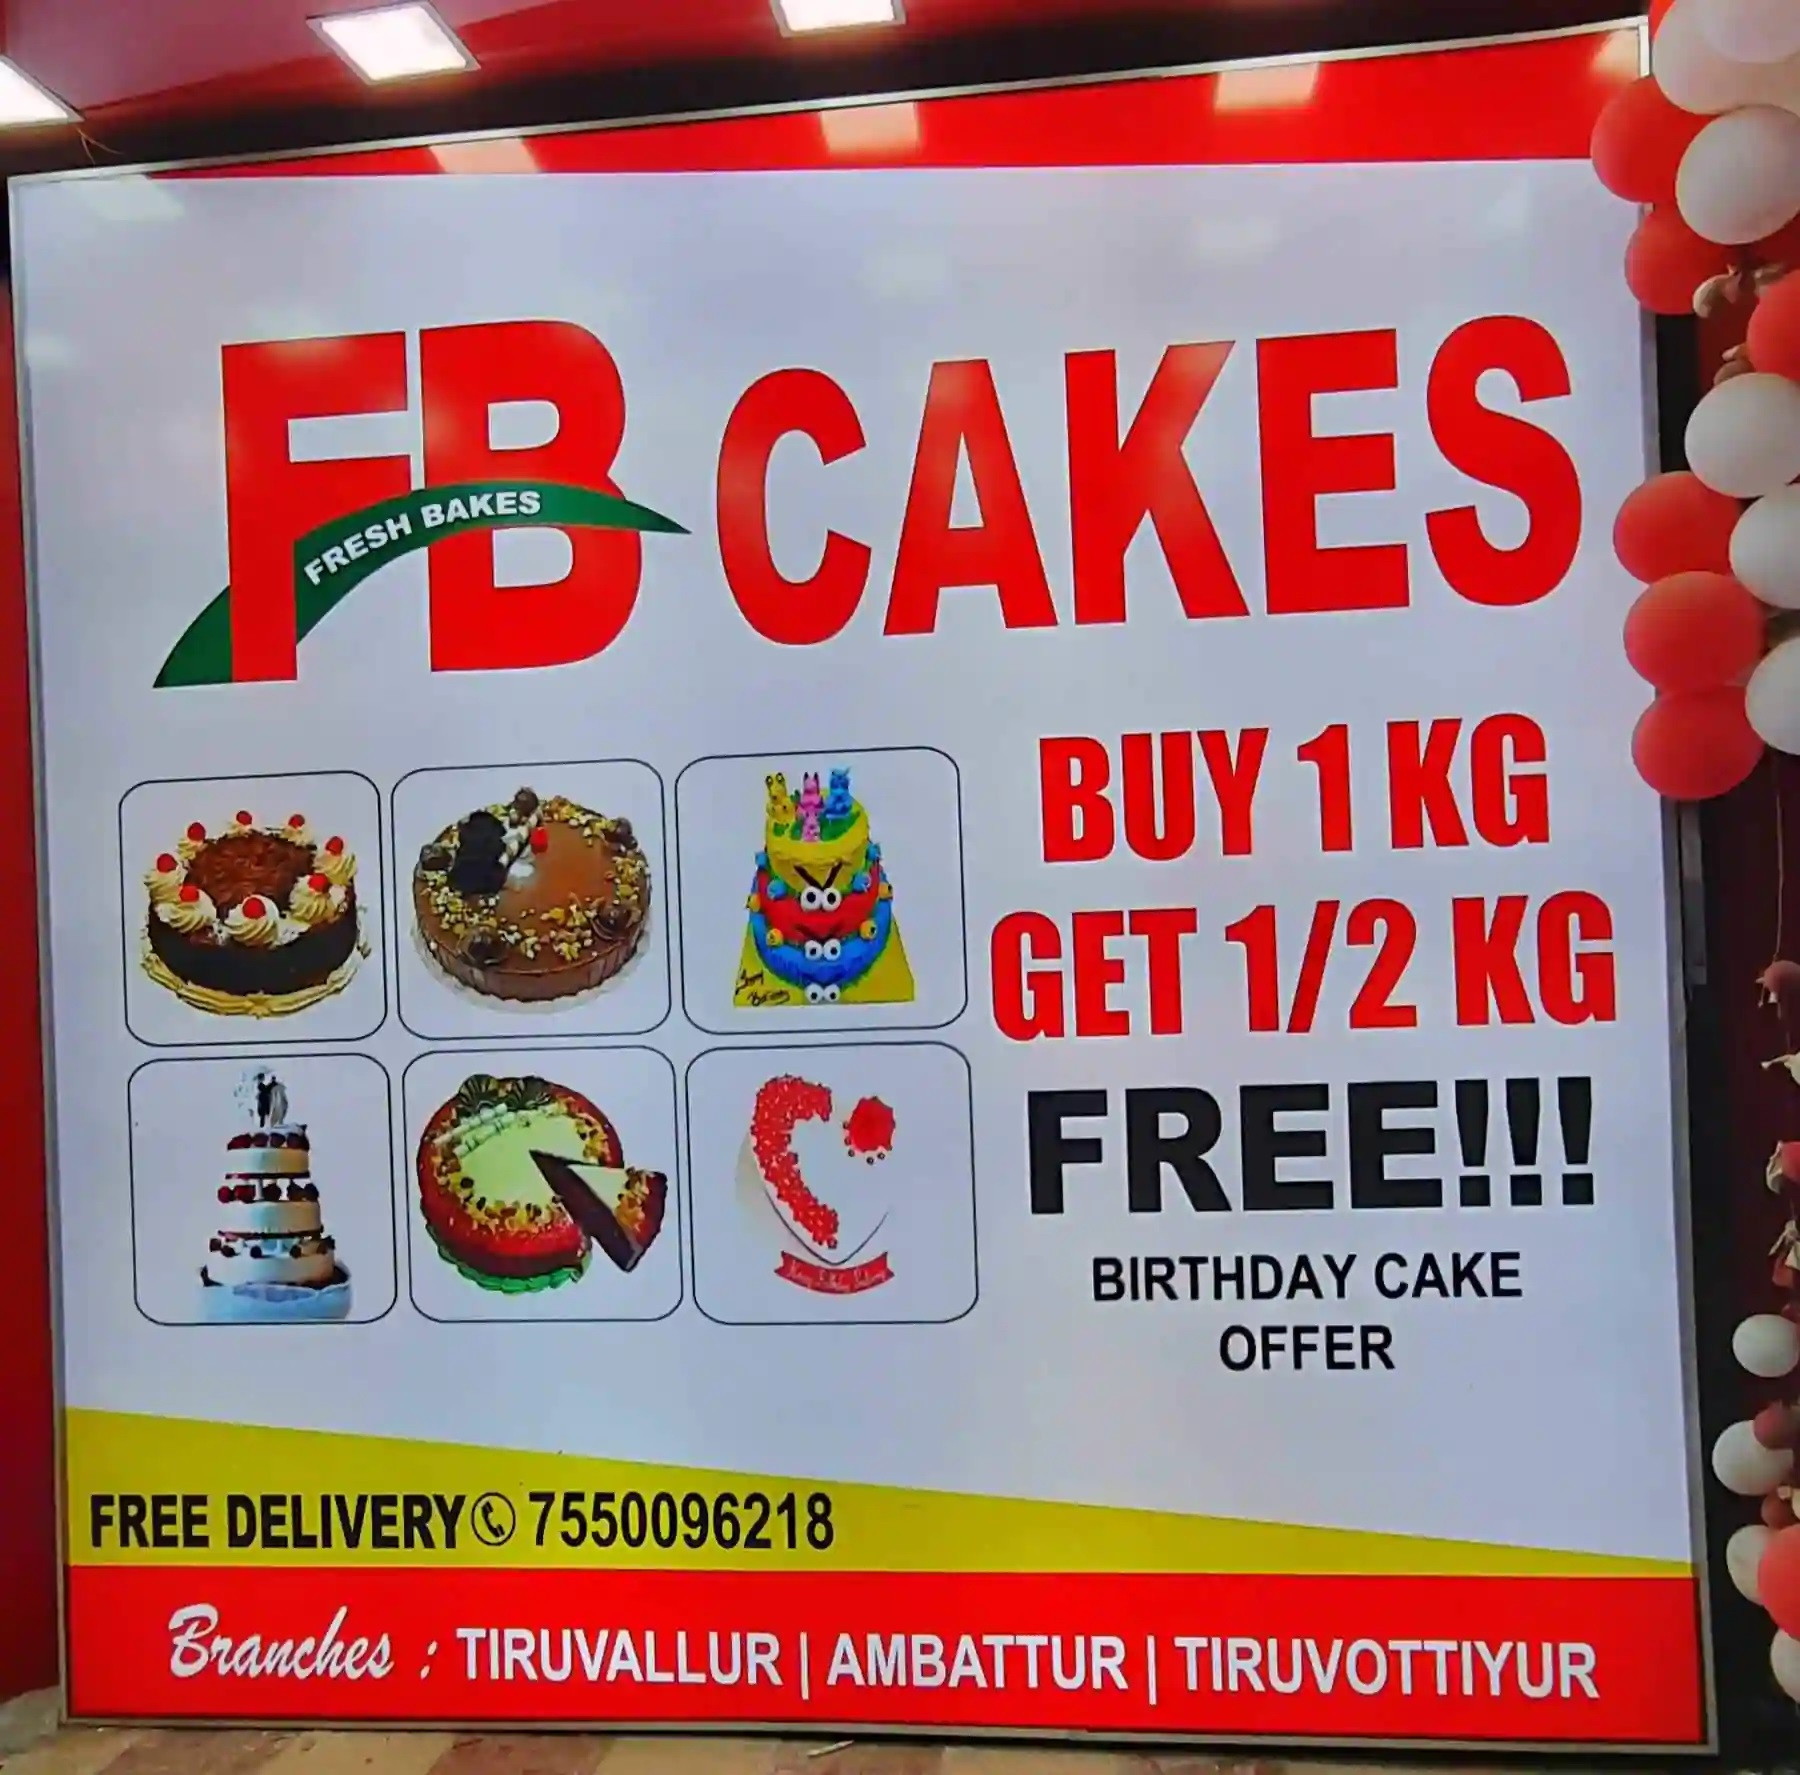 Fb Cakes in Royapuram,Chennai - Best Cake Shops in Chennai - Justdial